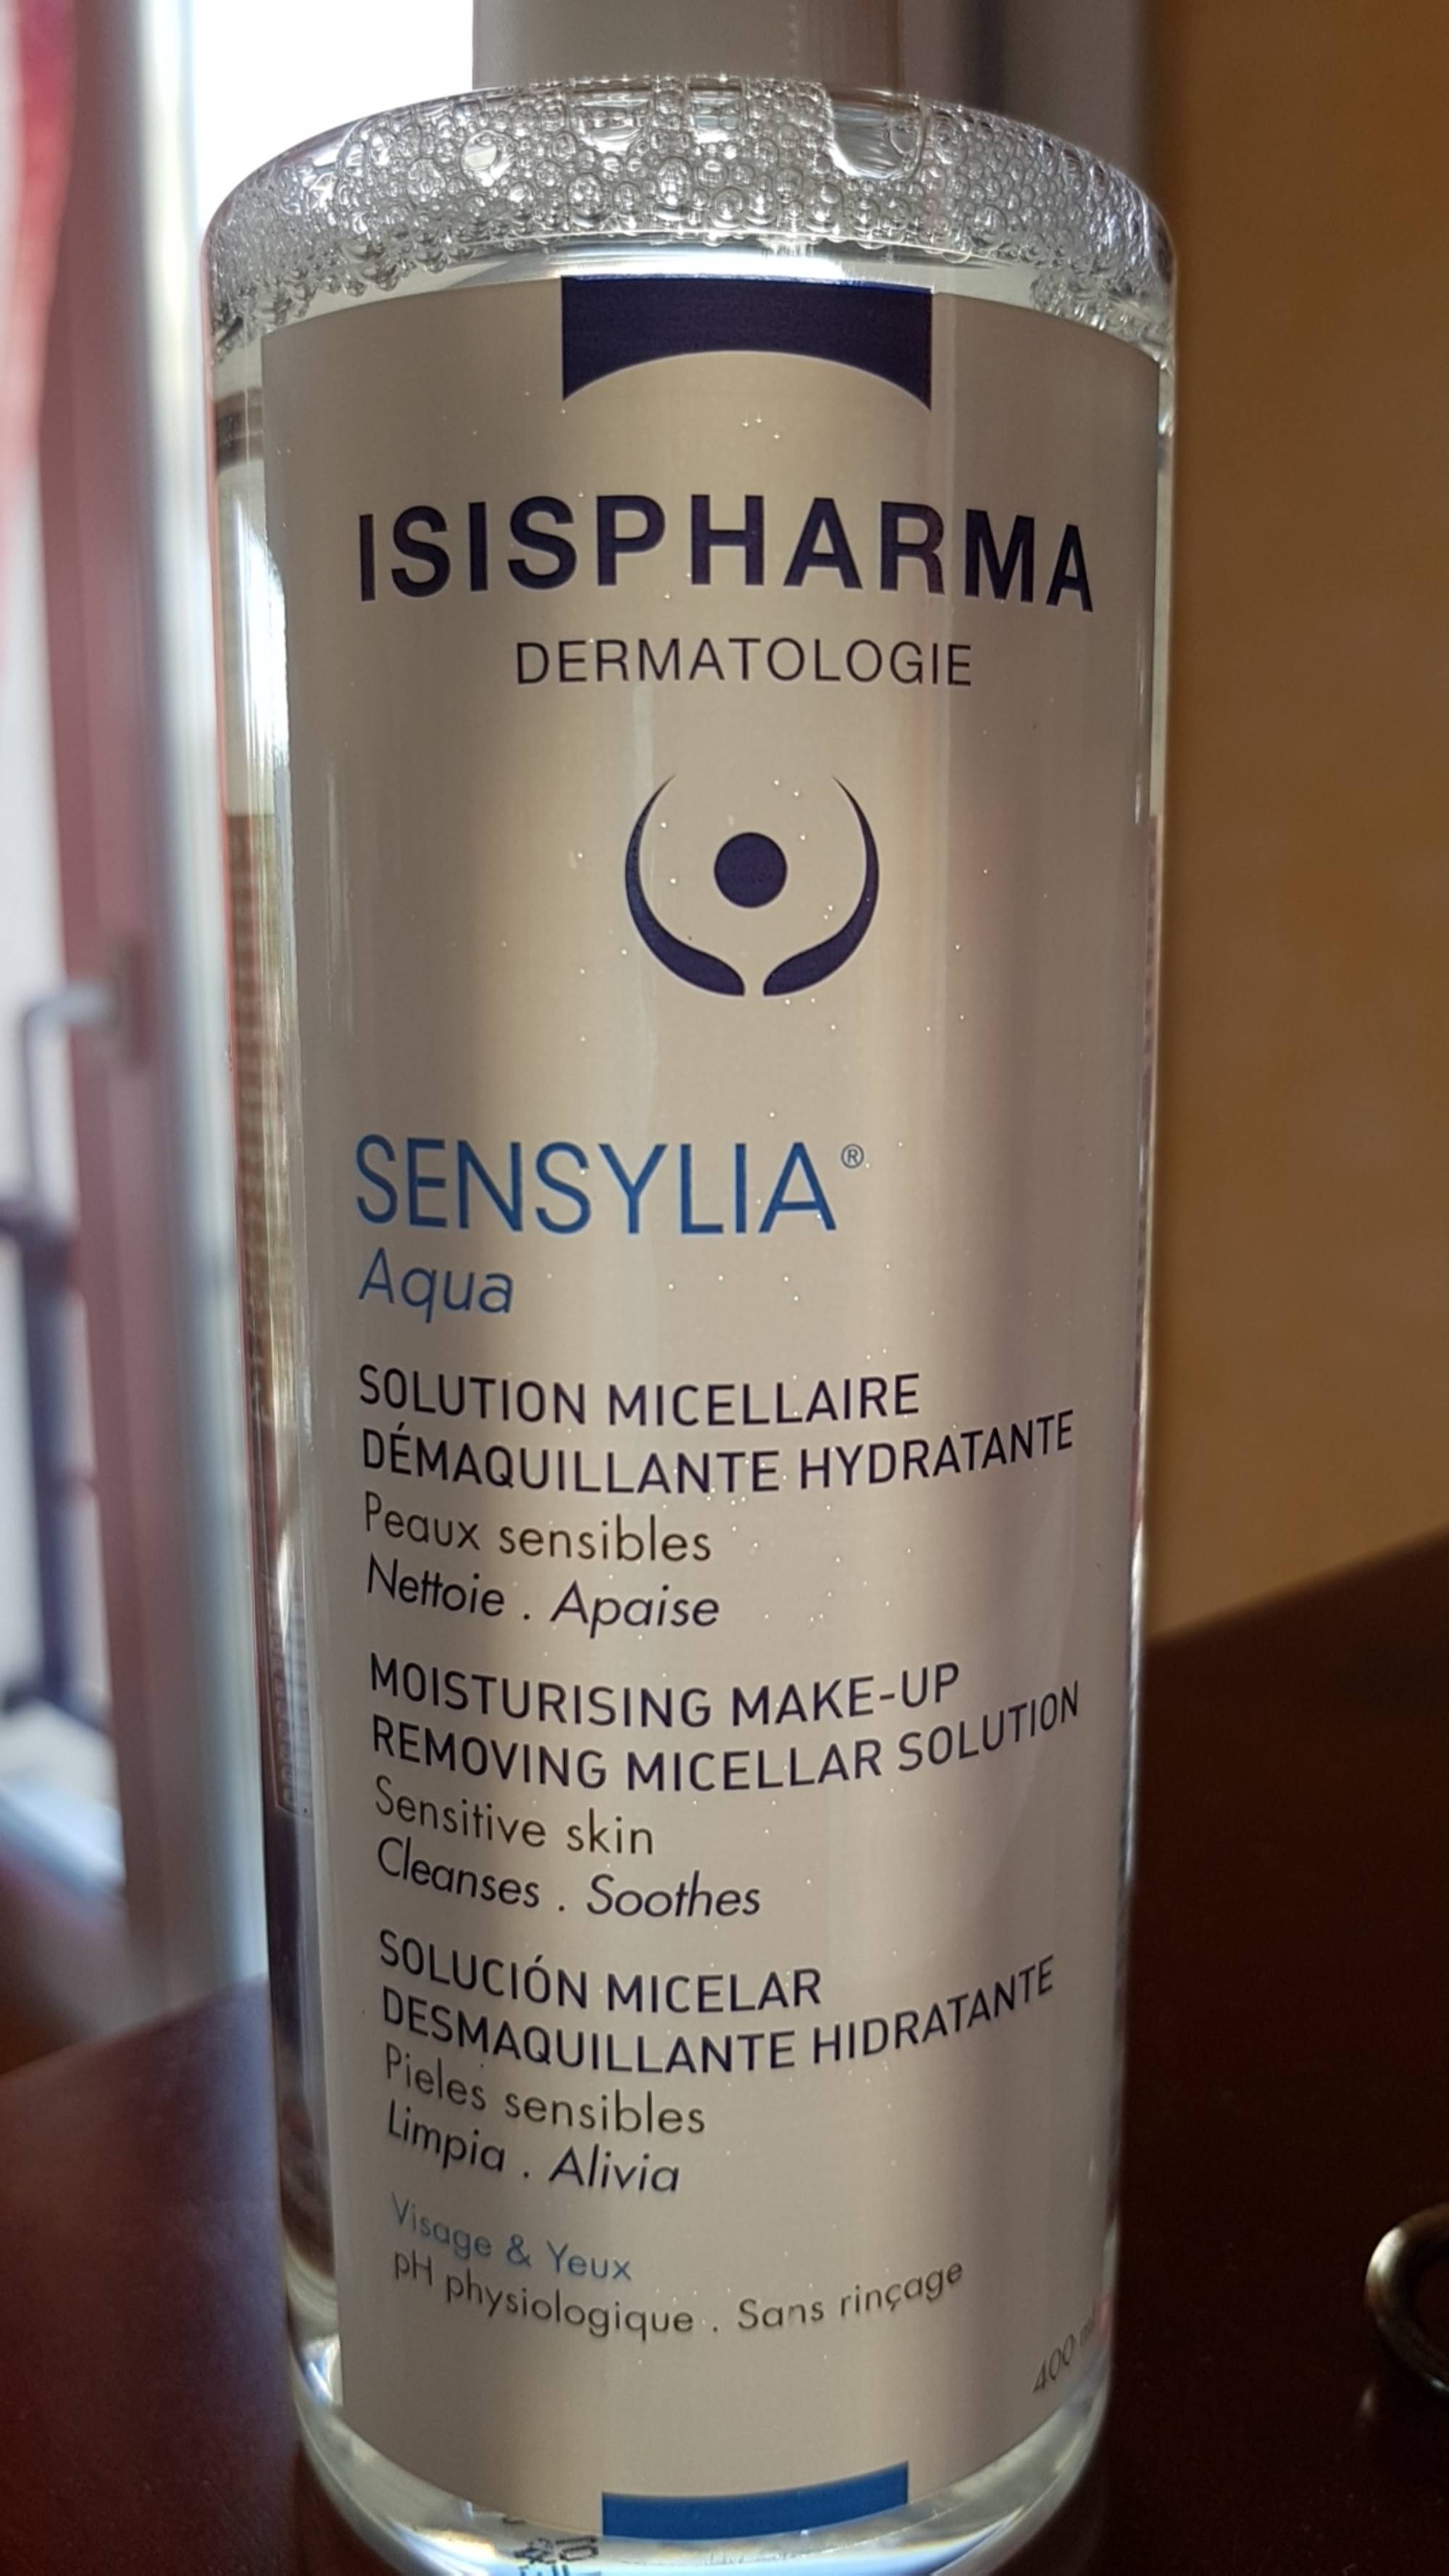 ISIS PHARMA - Sensylia - Solution micellaire démaquillante hydratante